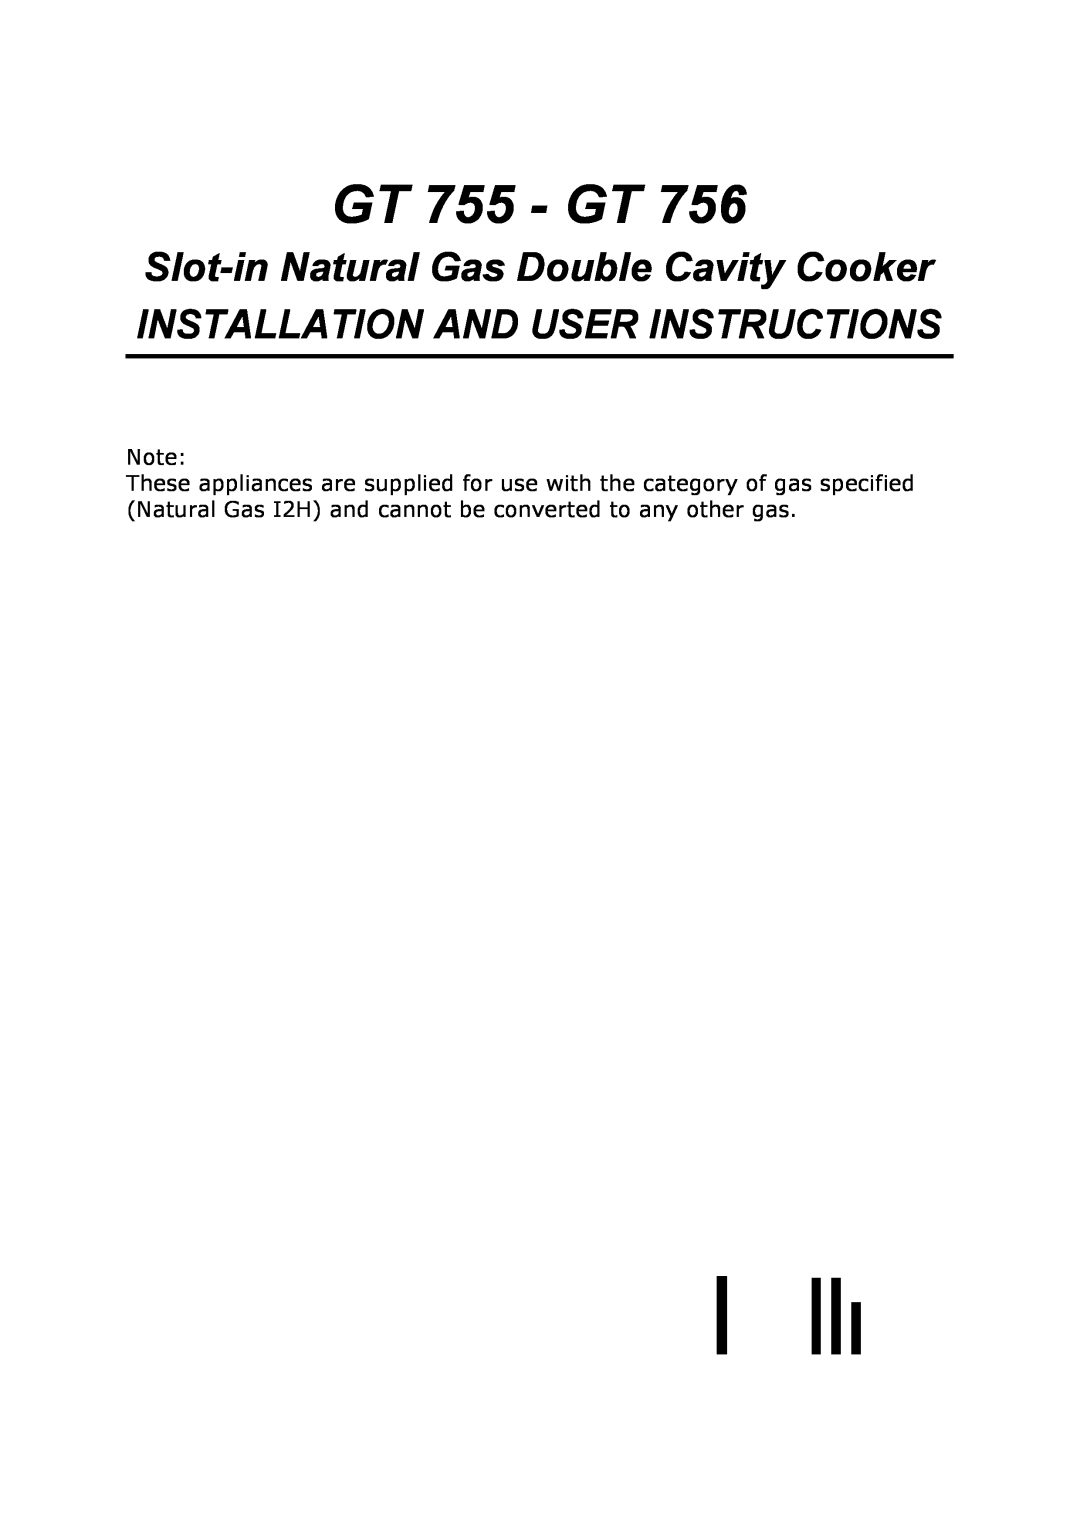 Glen Dimplex Home Appliances Ltd GT 756 manual GT 755 - GT, Slot-in Natural Gas Double Cavity Cooker 